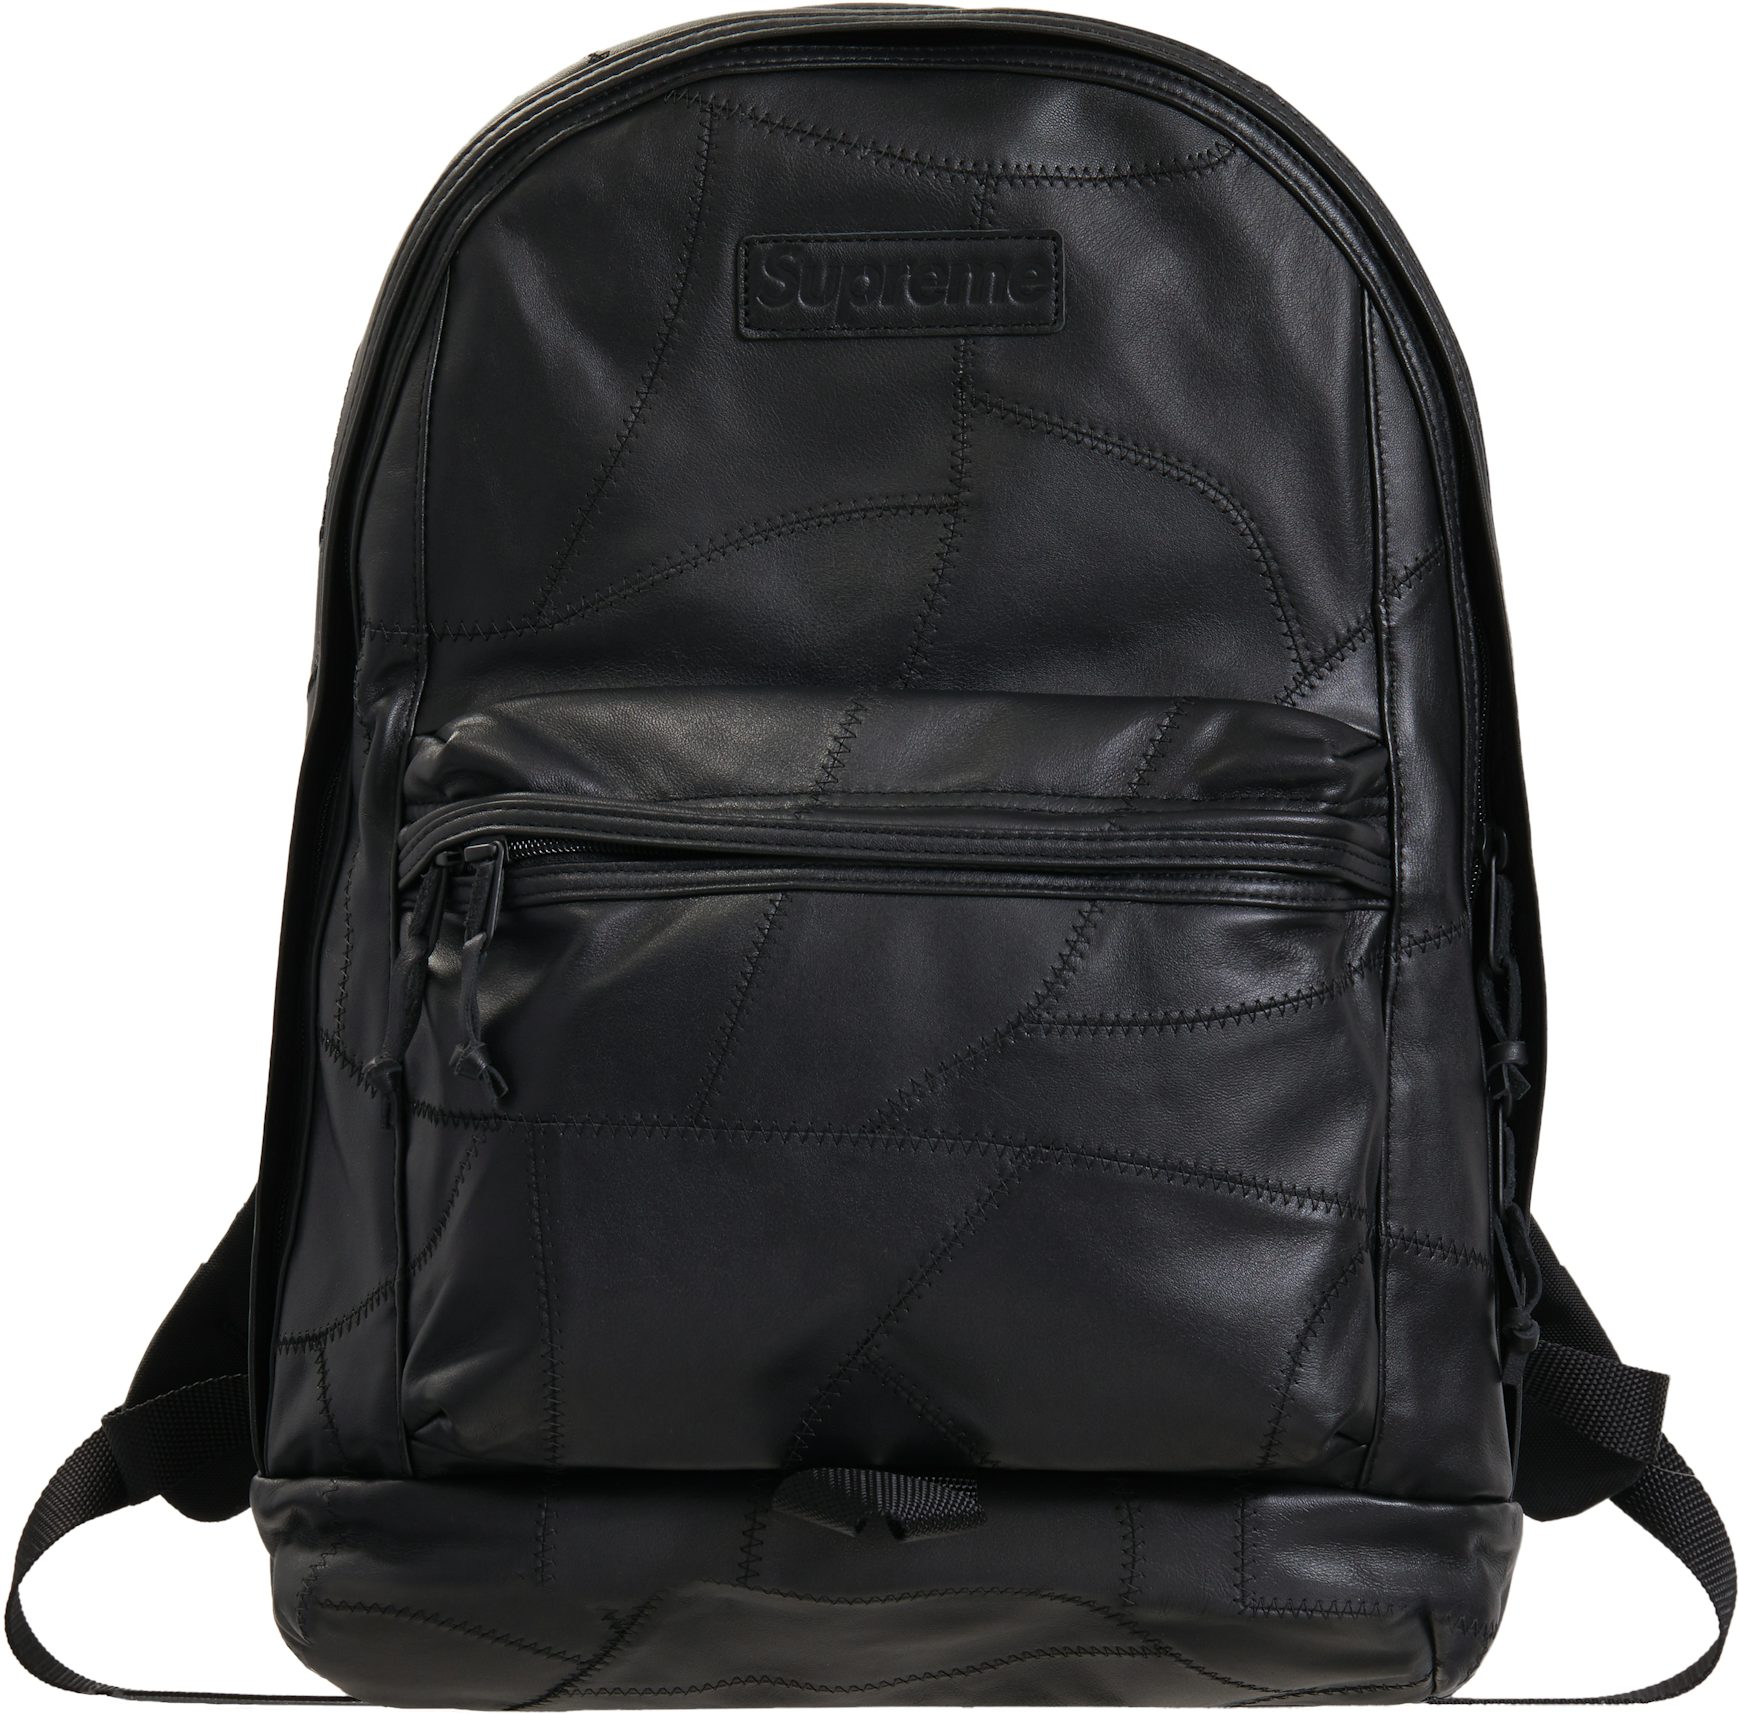 Supreme Backpack (FW19) - Black